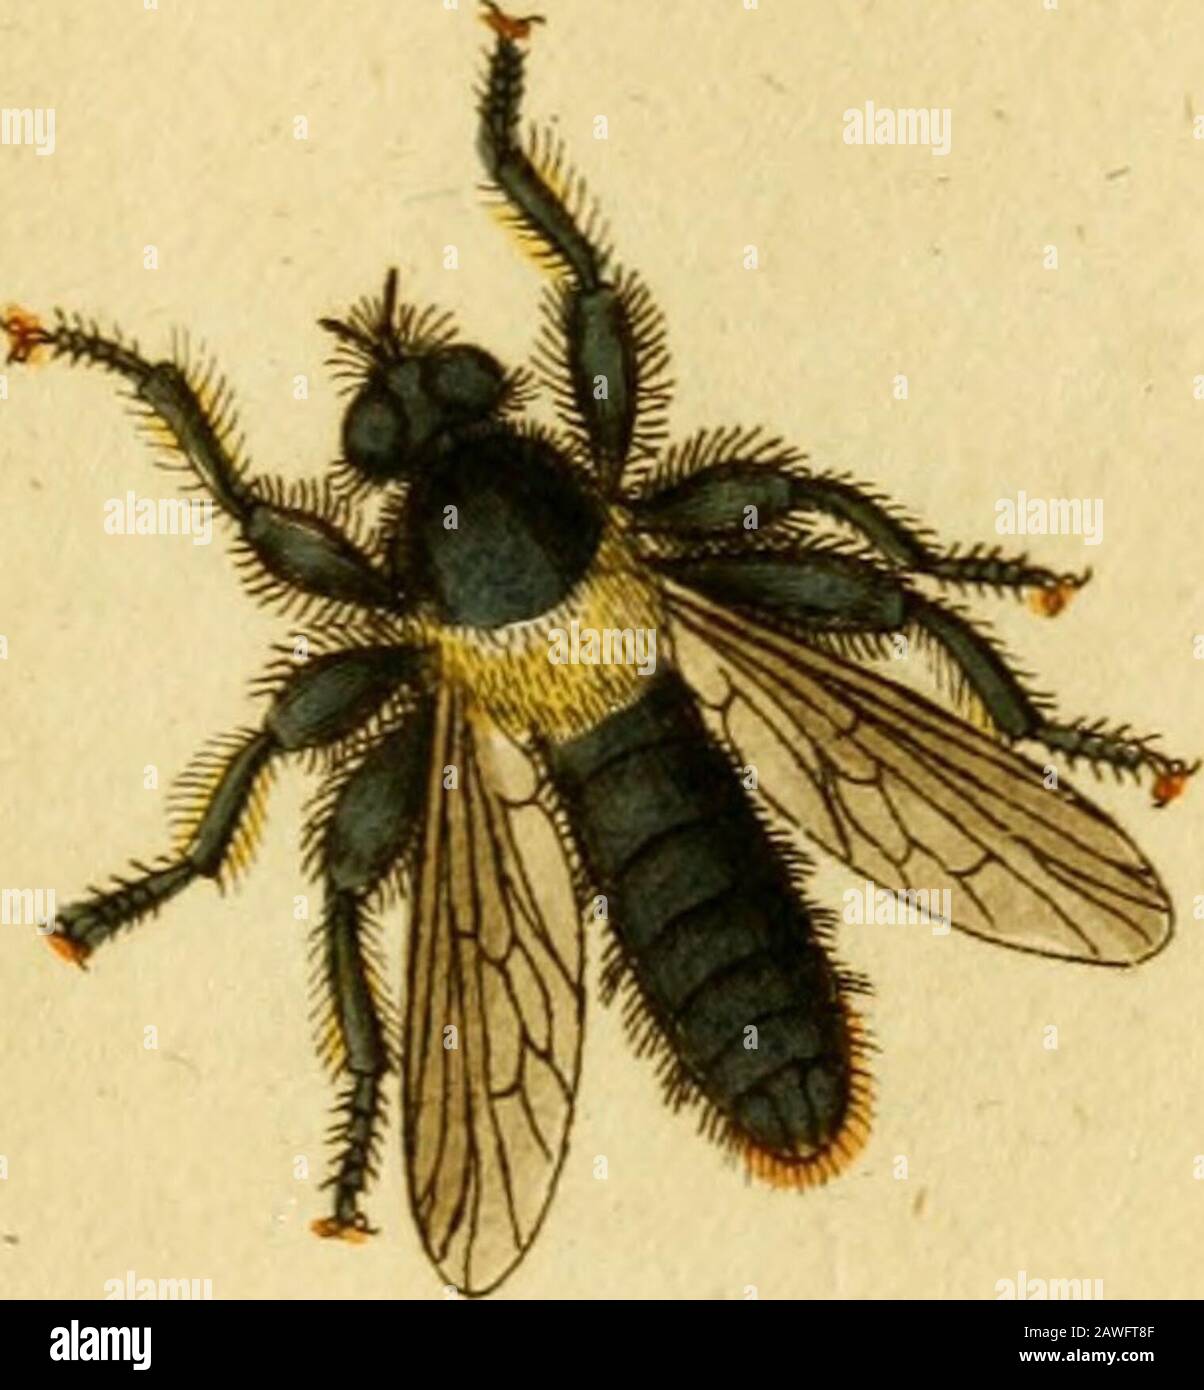 Favnae insectorvm Germanicae initia, oder, Deutschlands Insecten . ^z/rt/öma c^ulfici 5^7^/: ? Jc^r« TRITOMA dubia.Der zweifelhafte Staubkäfer: Tnfoma duhin: nigra elytris pedibusqne tei^taceis. Fa/;H«7. Gen. Inf, Msnt, p. 215. Spec. Inf. T. I. n.3. p. 80. Manc. Inf. T.I. n. 3. p. 44. Ent. fyft. T. 11. n. 5. p. 506.Amfoioma dubia: hemifphaerica nigra, elytris punctato-ftiiatis pedibusque rufxs: tibiis pofticis arcuatis. Kng. n. 12.Sphaeridiim ferrugineim. Herhfi Nat. d. K. IV. n. 5. tab. 57. fig. 5. E.Volvoxis dubia. Schneid. N. Mag. 5. n. 9. p. 540,Fanxer Ent. germ. I. n. 3. p. 344. Habitat f Stock Photo